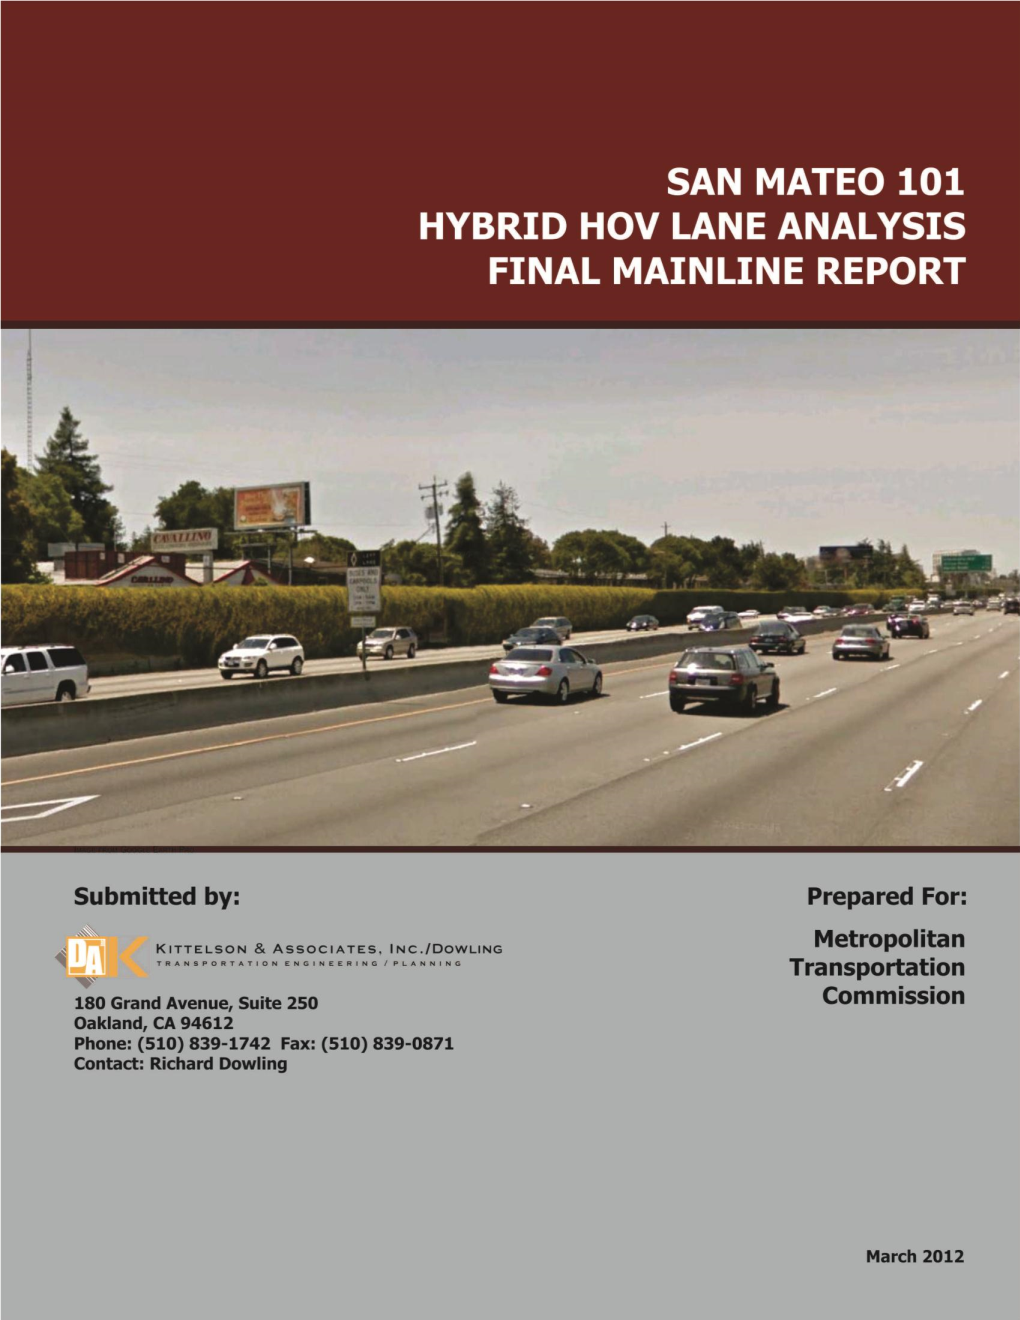 San Mateo 101 Hybrid HOV Lane Analysis Project #: DA-101-SM-#9 Deliverable 7 - Final Mainline Report (P09039.010, KAI 170670)